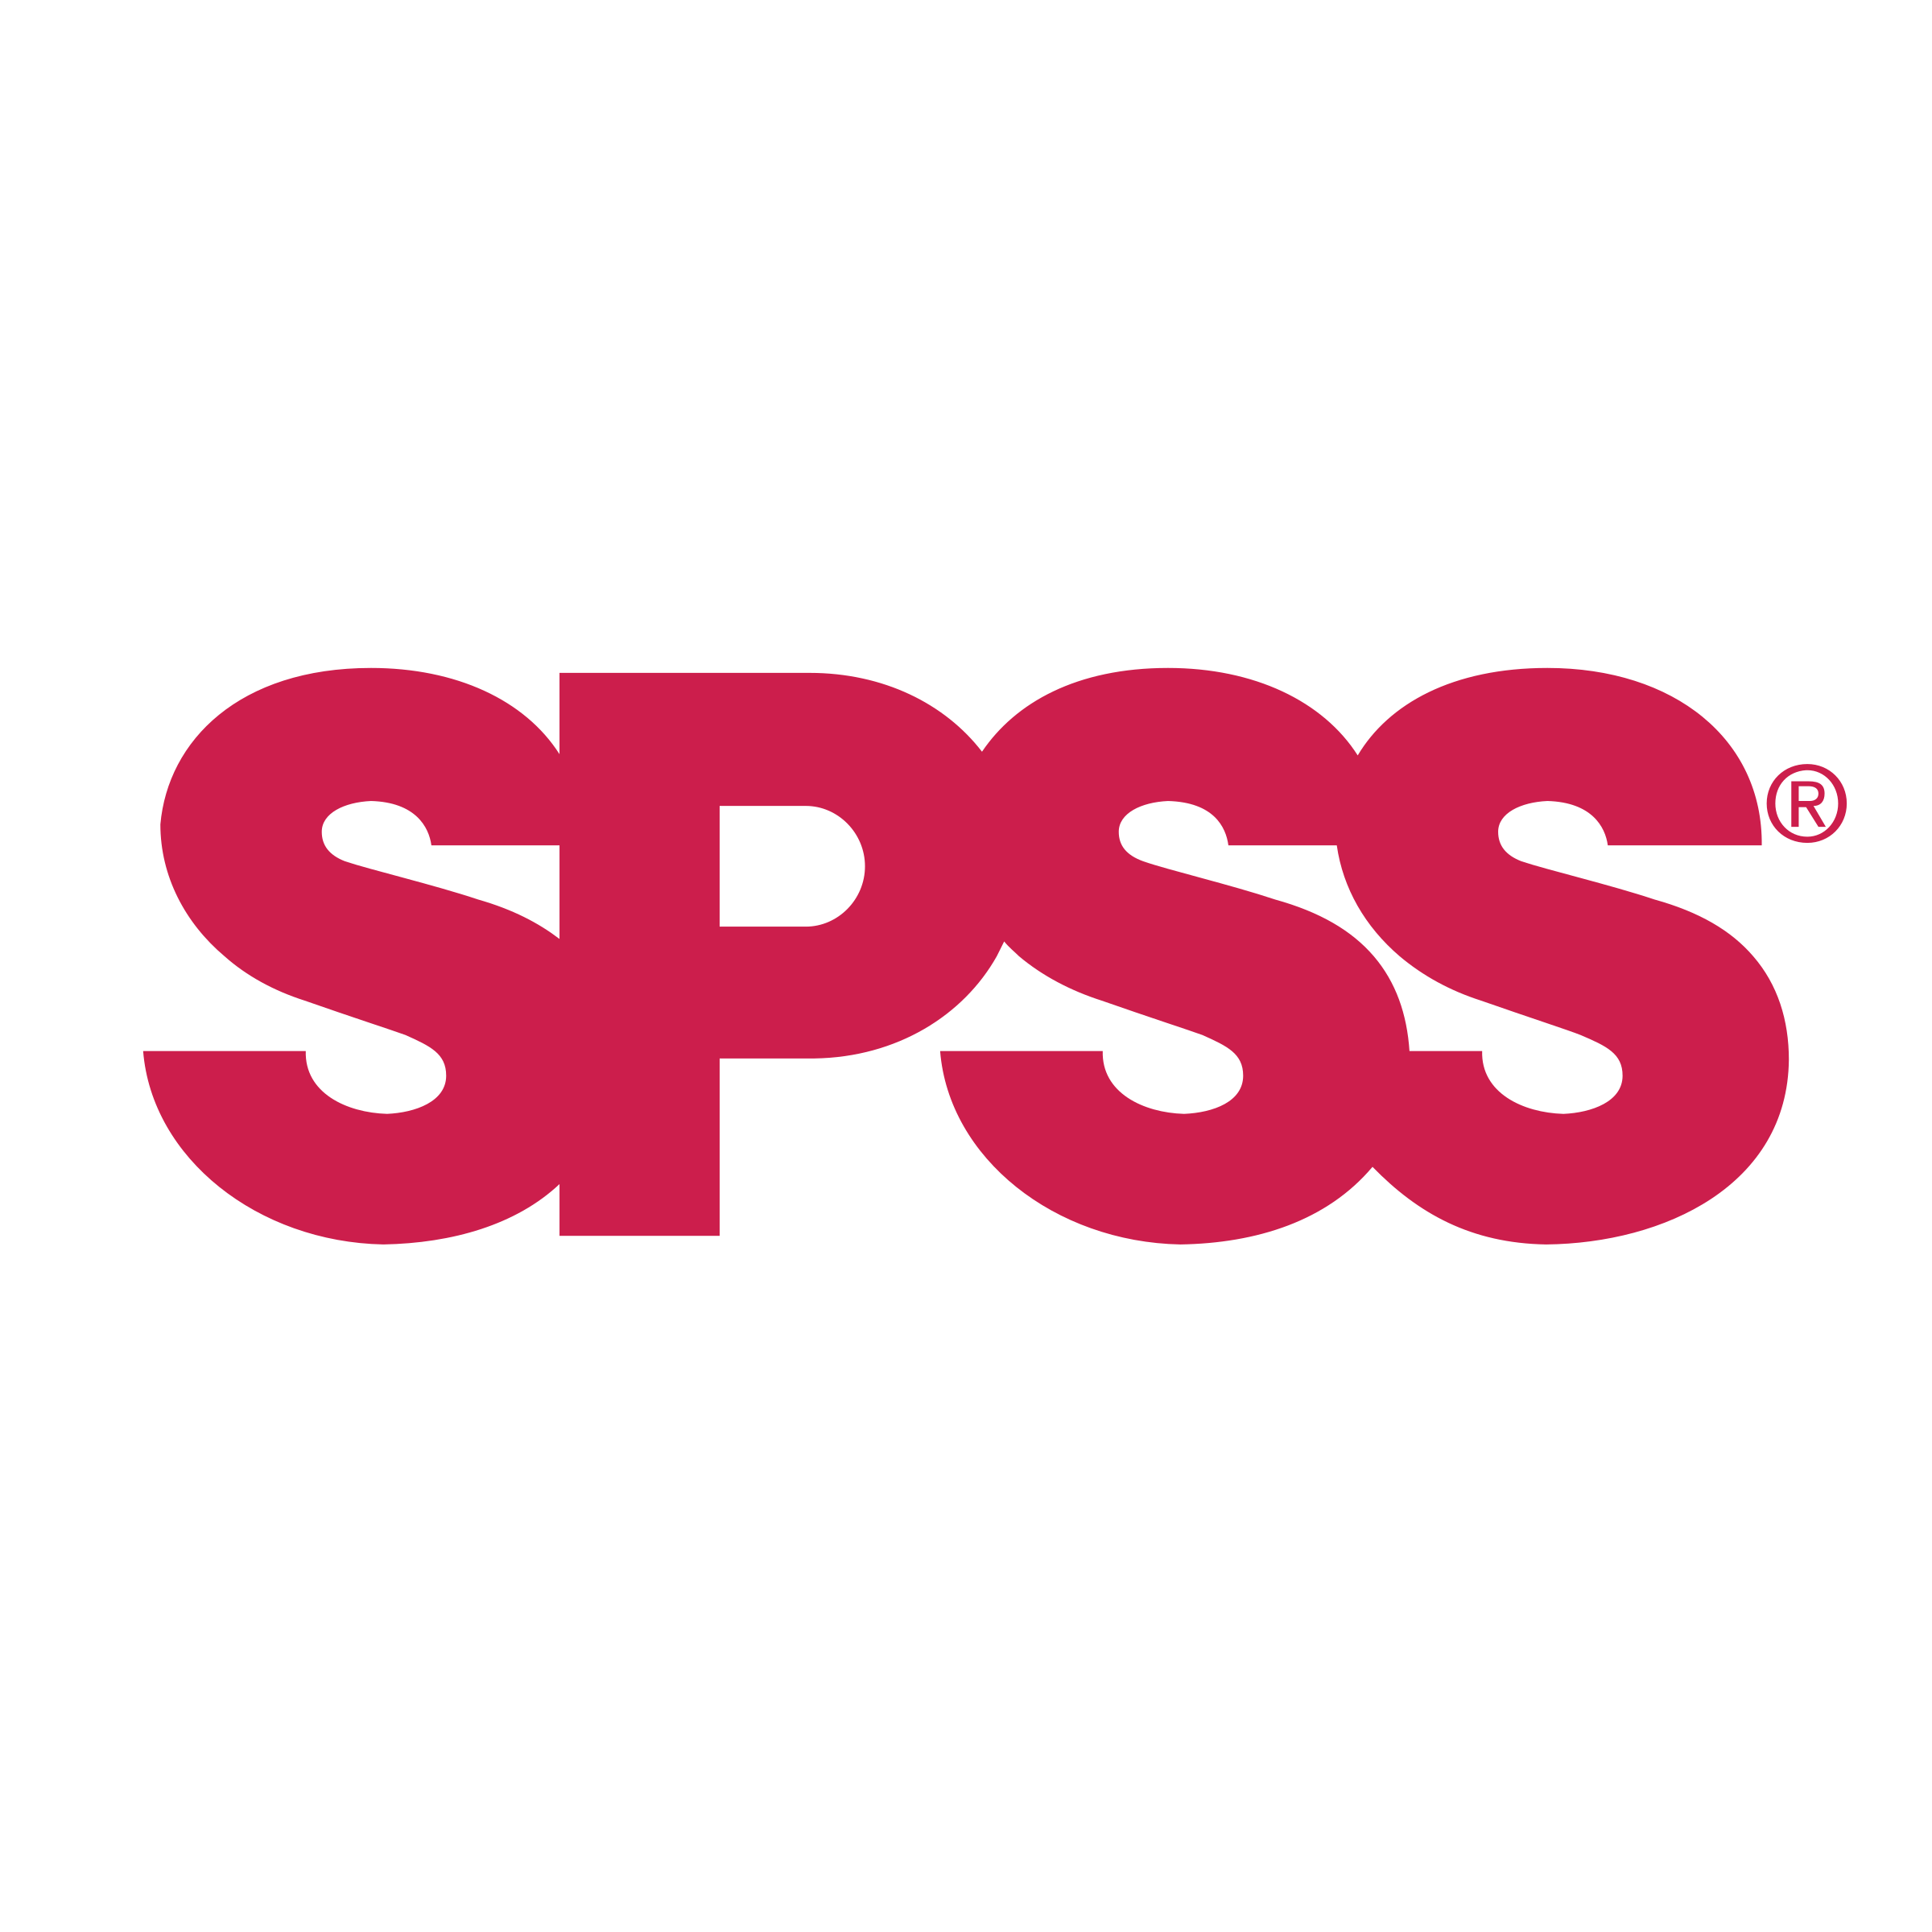 SPSS Logo - SPSS Logo PNG Transparent & SVG Vector